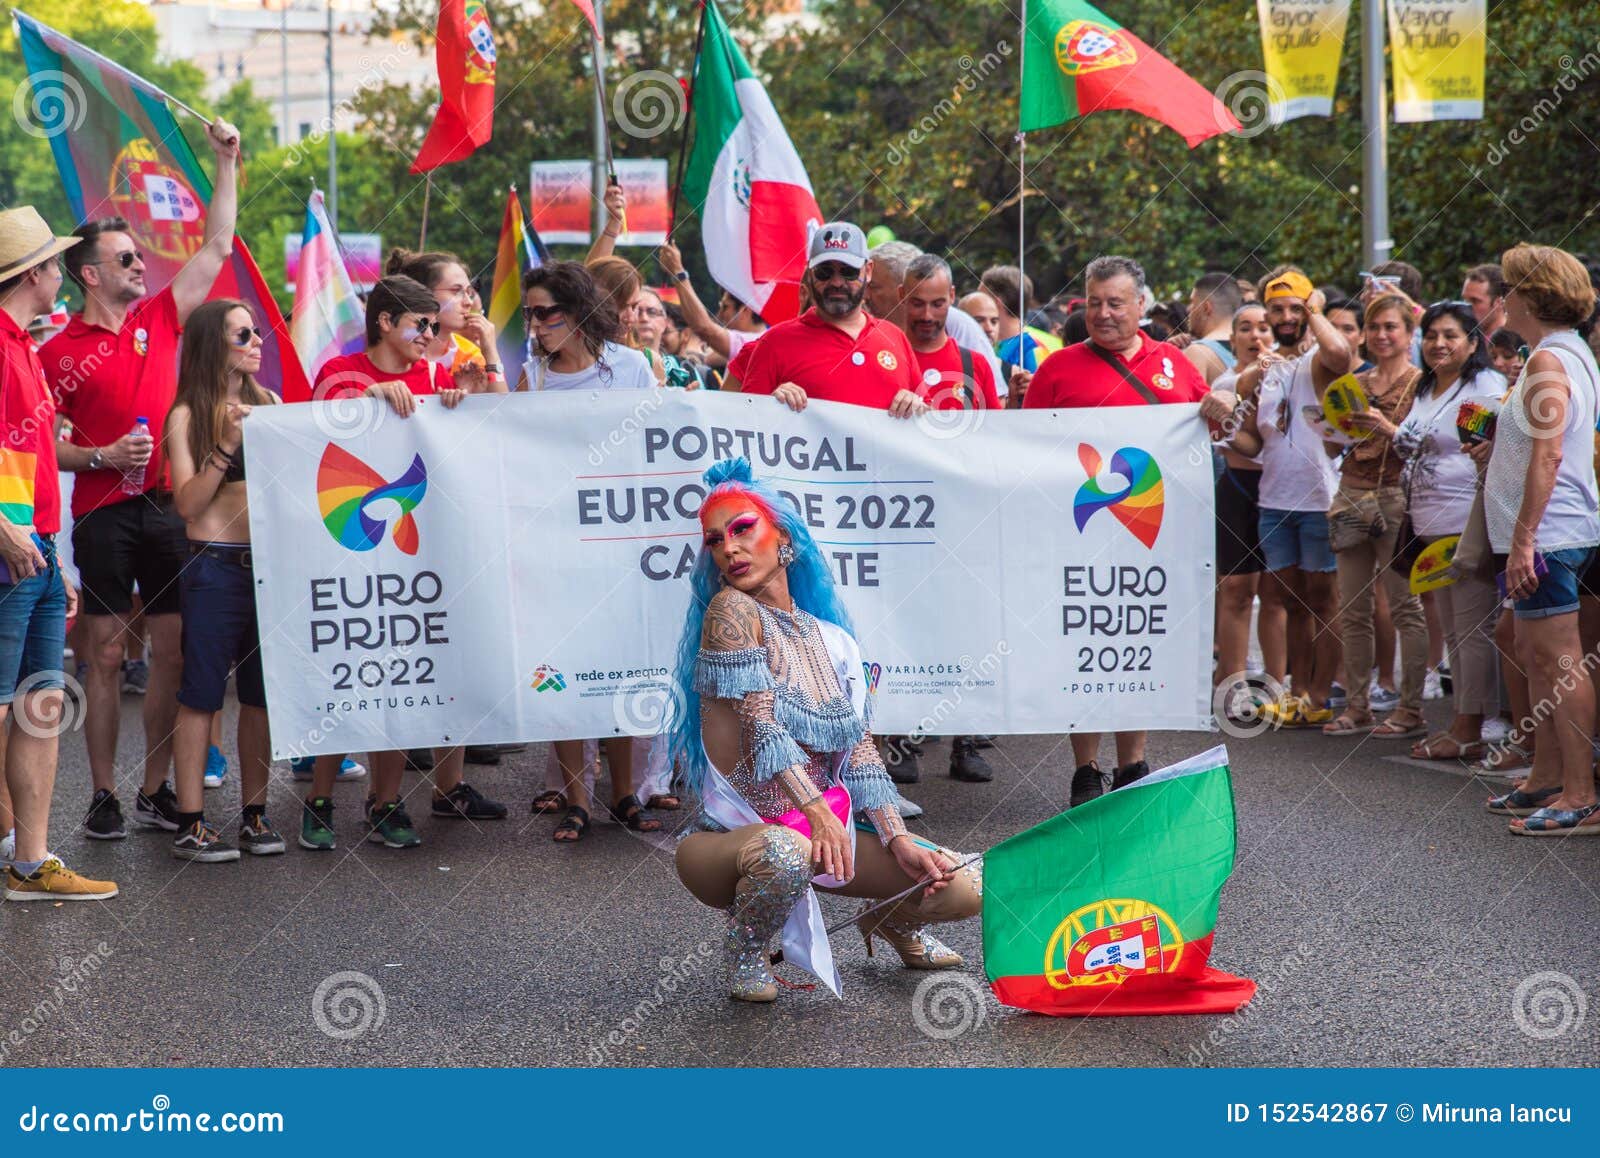 madrid-spain-july-gay-pride-orgullo-parade-diva-portugal-people-celebrating-love-diversity-portuguese-flags-152542867.jpg